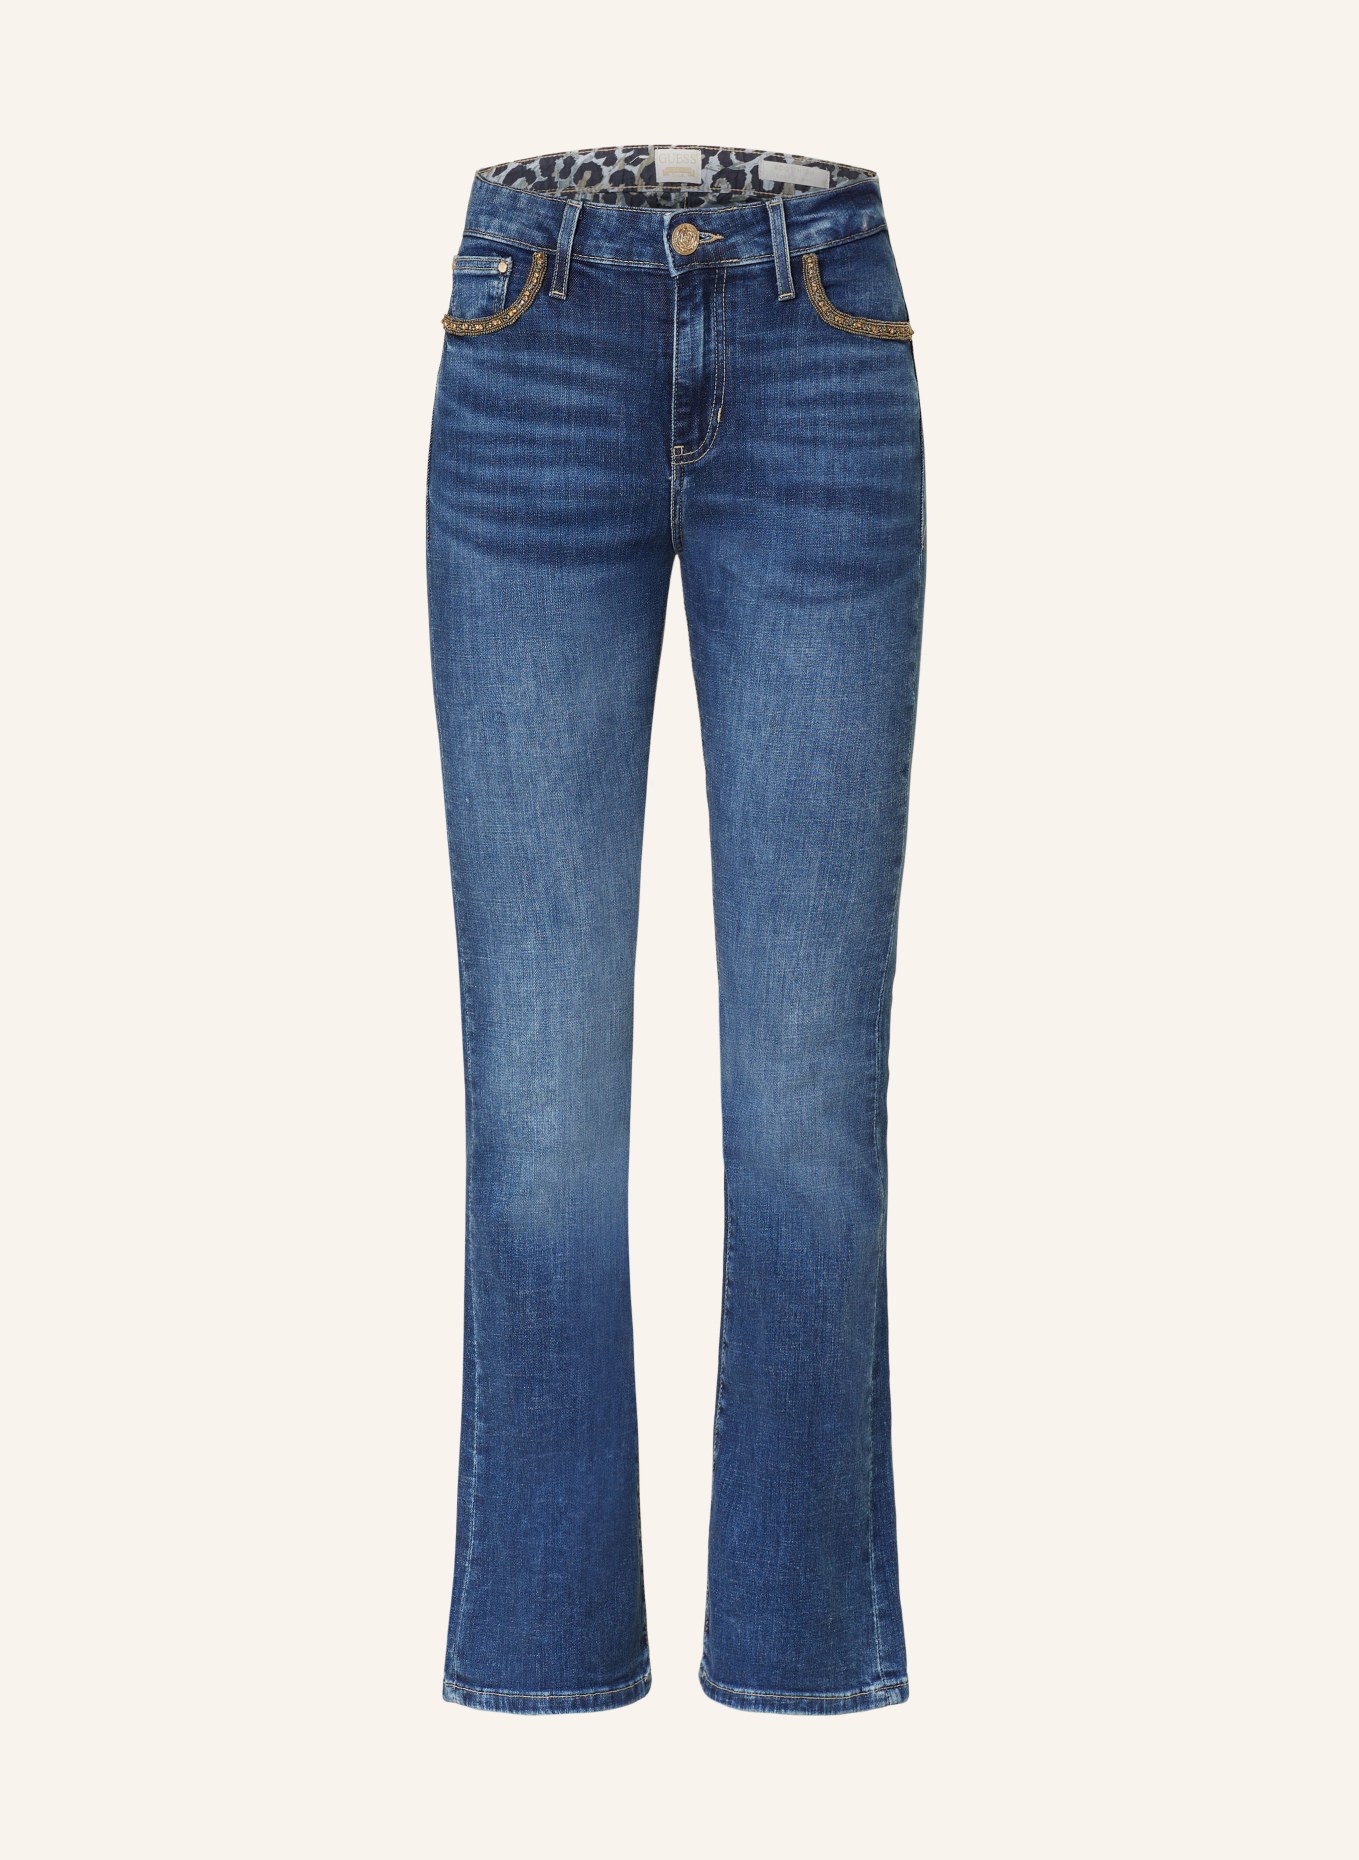 GUESS Flared Jeans SEXY FLARES, Farbe: ETSH ETOSHA (Bild 1)